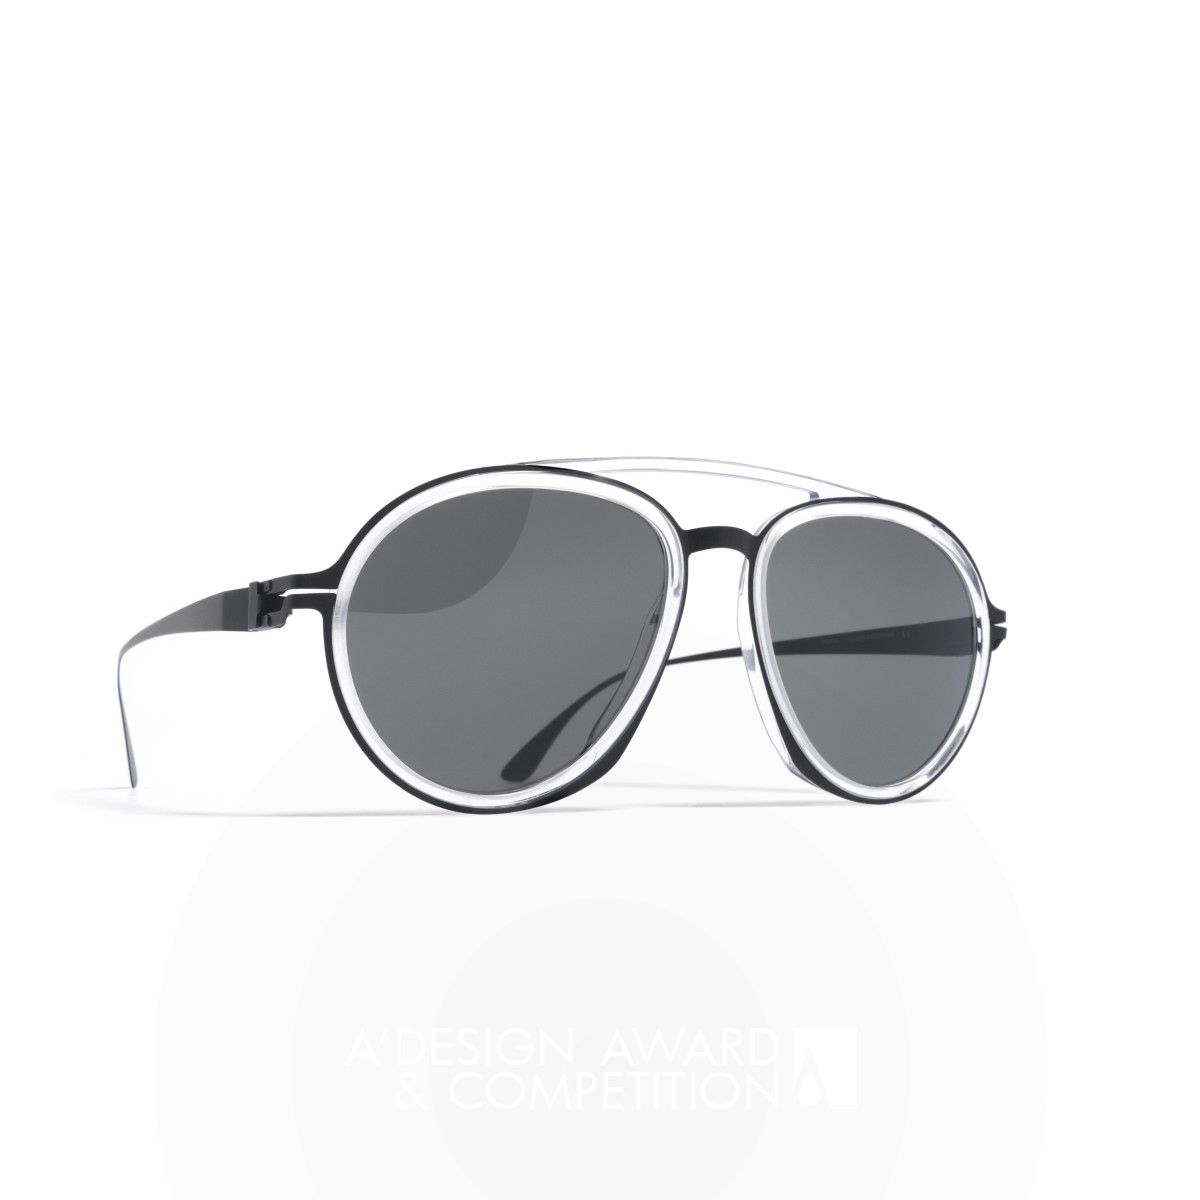 Mykita / Damir Doma 1.3 <b>sunglasses